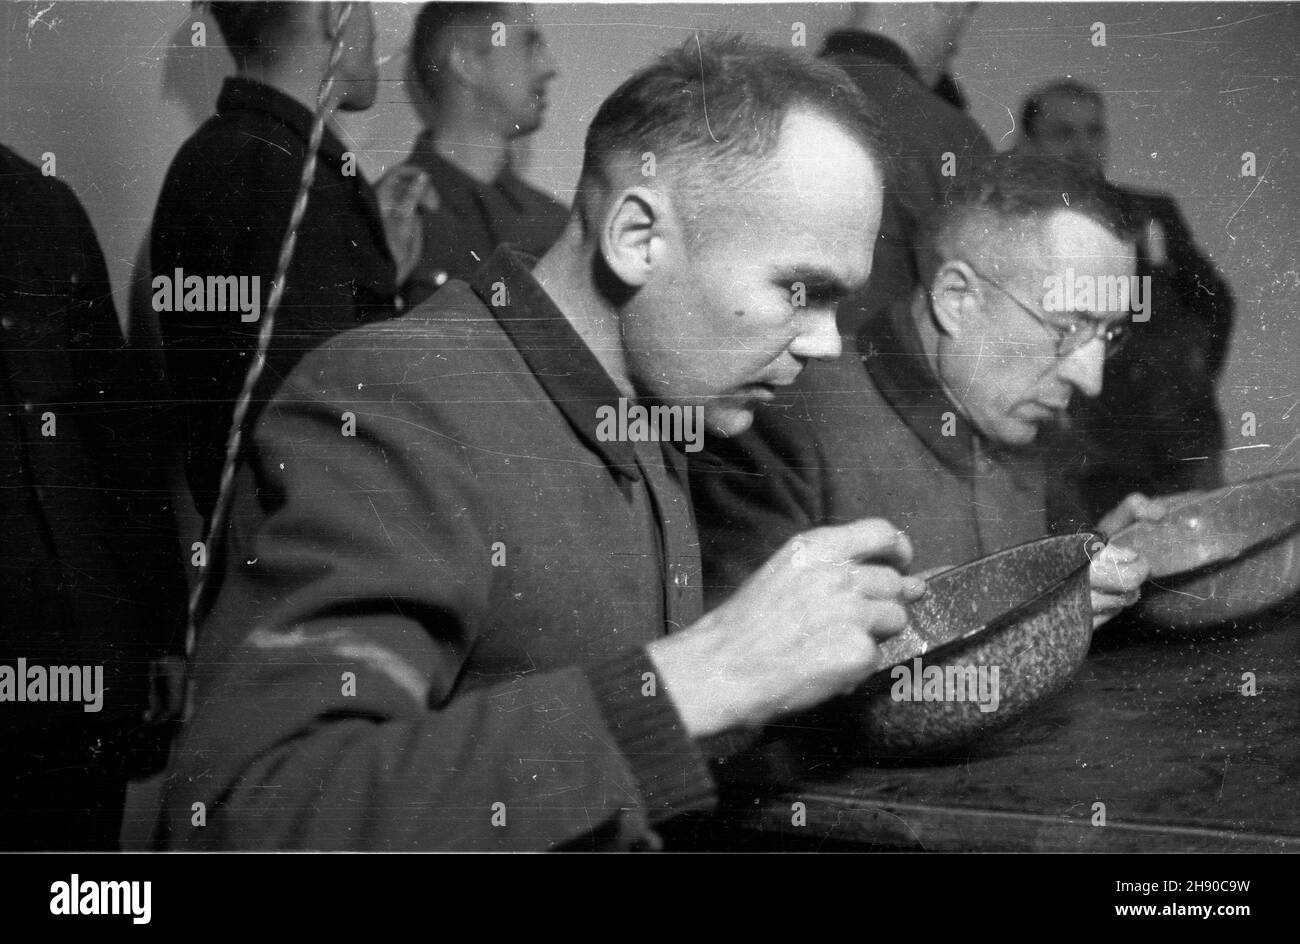 Kraków, 1947. Nadzorcy obozu oœwiêcimskiego s¹dzeni przed Najwy¿szym Trybuna³em Narodowym (25.11.1946 - 16.12 1947, og³oszenie wyroku 22.12.1947). Nz. posi³ek pods¹dnych. bb/gr  PAP      Cracow, 1947. The 2nd trial of criminals from German Nazi death camp in Auschwitz before the Highest National Tribunal held between Nov. 25, 1946 and December 16, 1947. The verdict was announced on December 22, 1947. Pictured: a meal for the defendants.  bb/gr  PAP Stock Photo